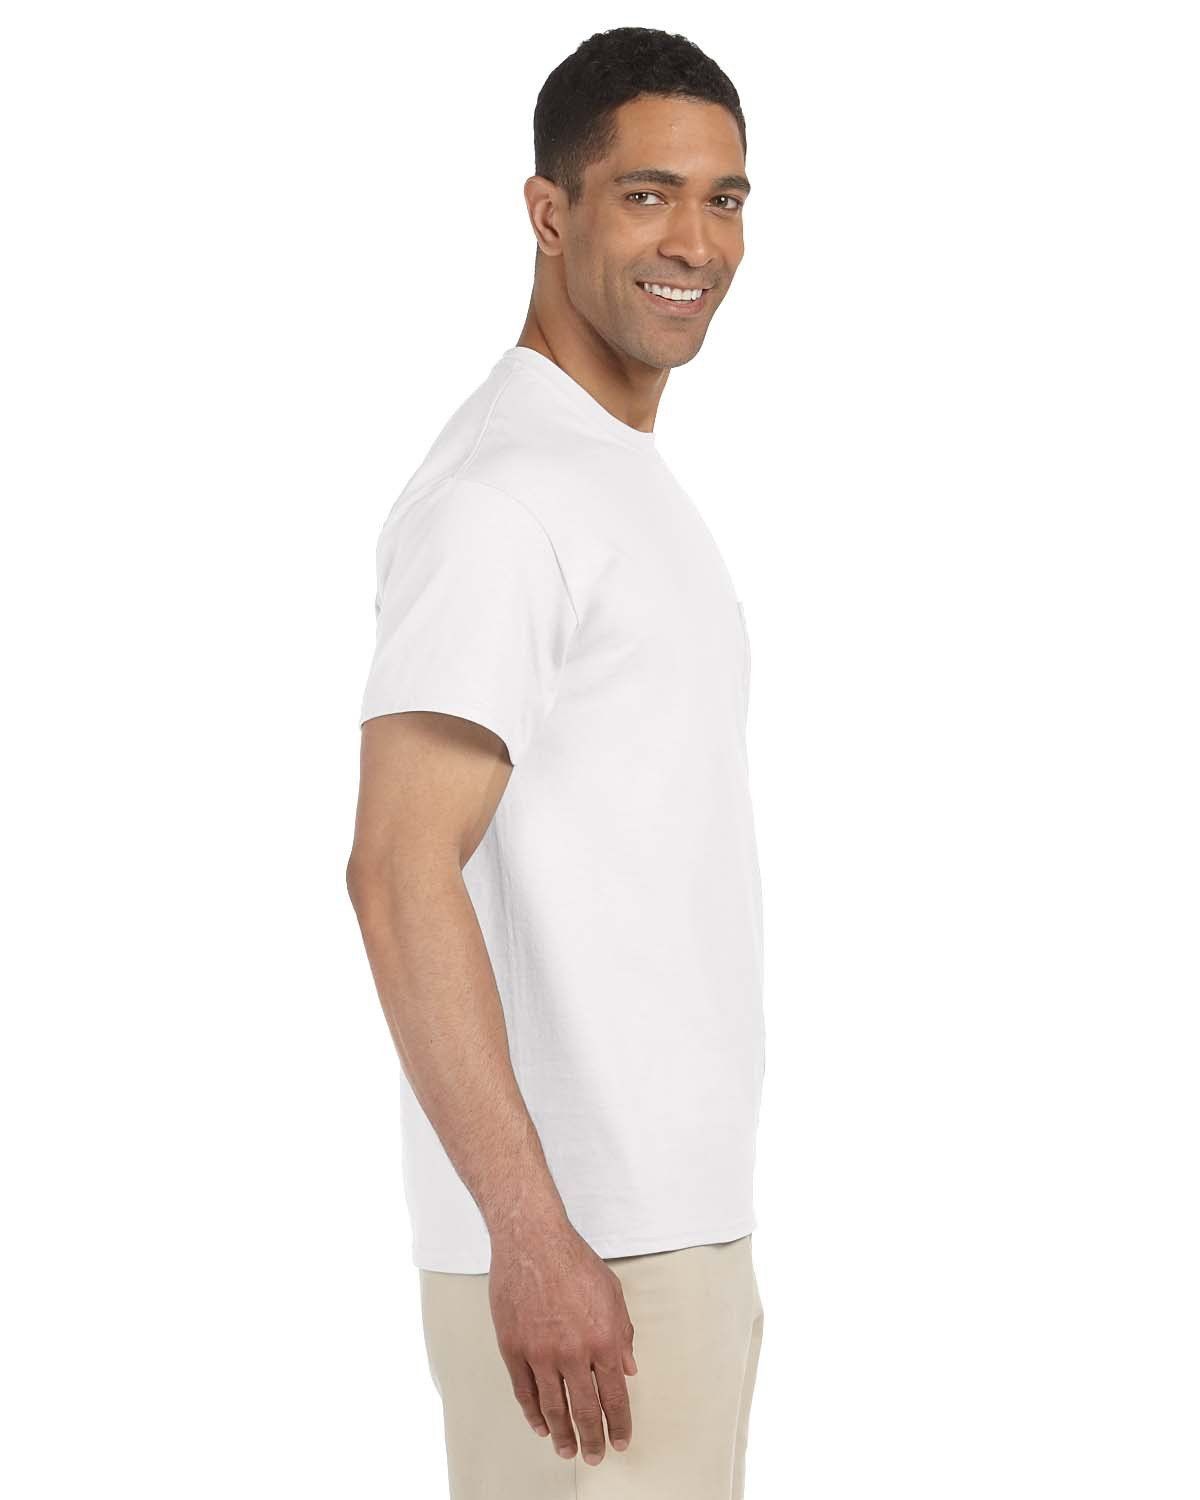 'Gildan G230 Adult 6.0 oz Ultra Cotton Pocket T-Shirt'